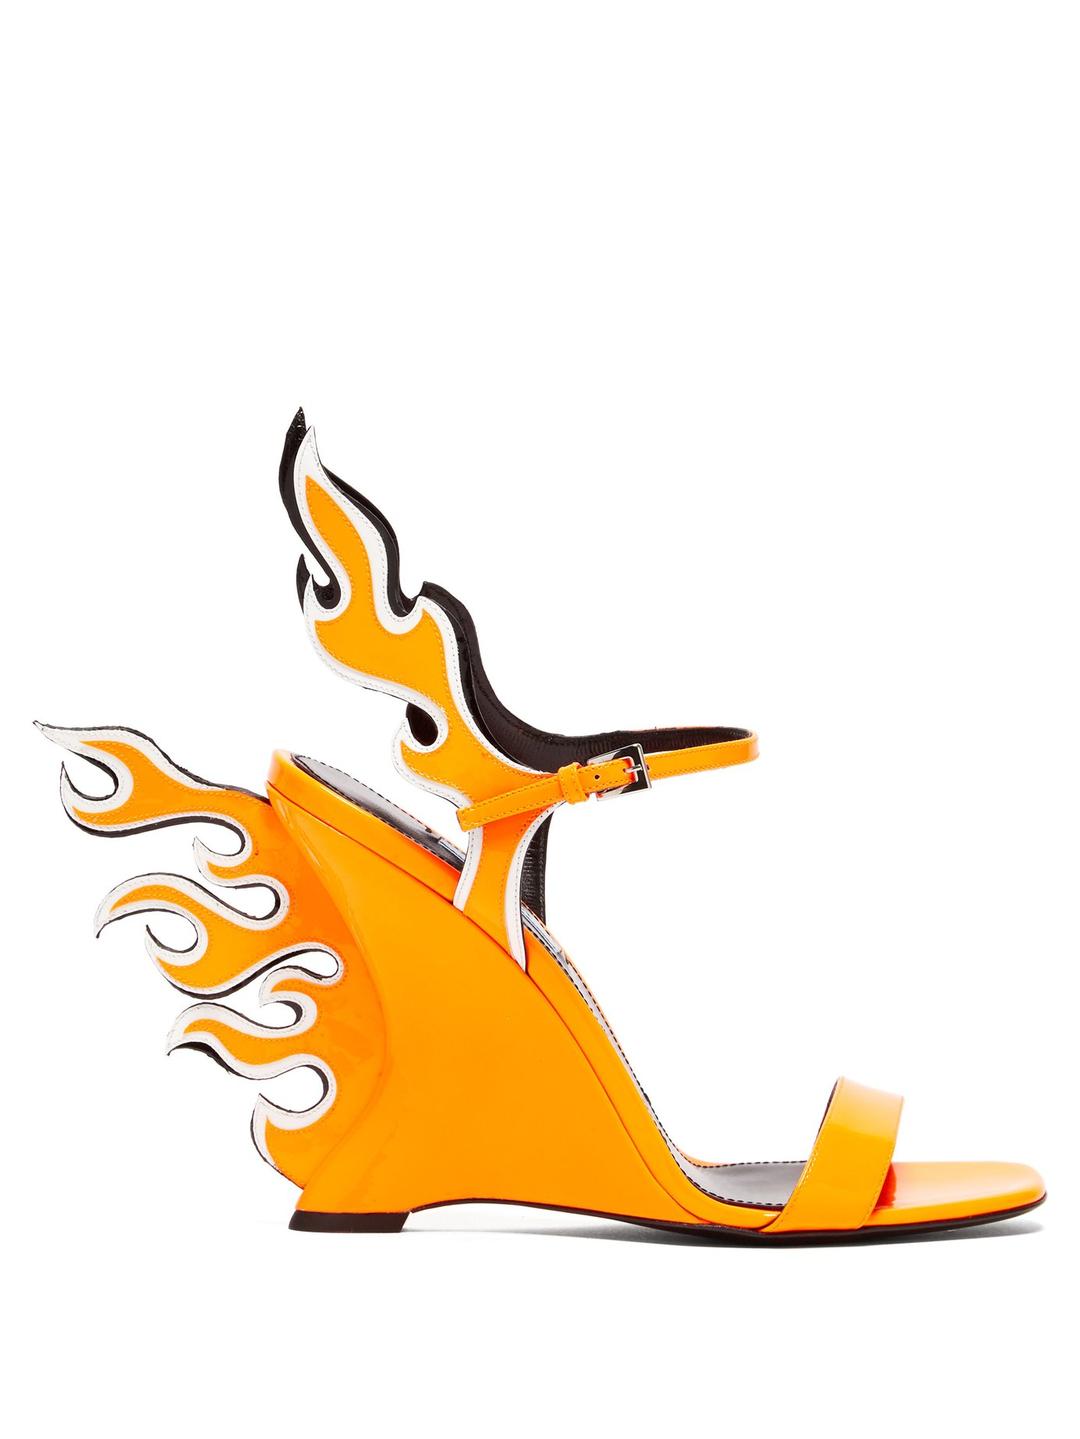 prada flame high heels